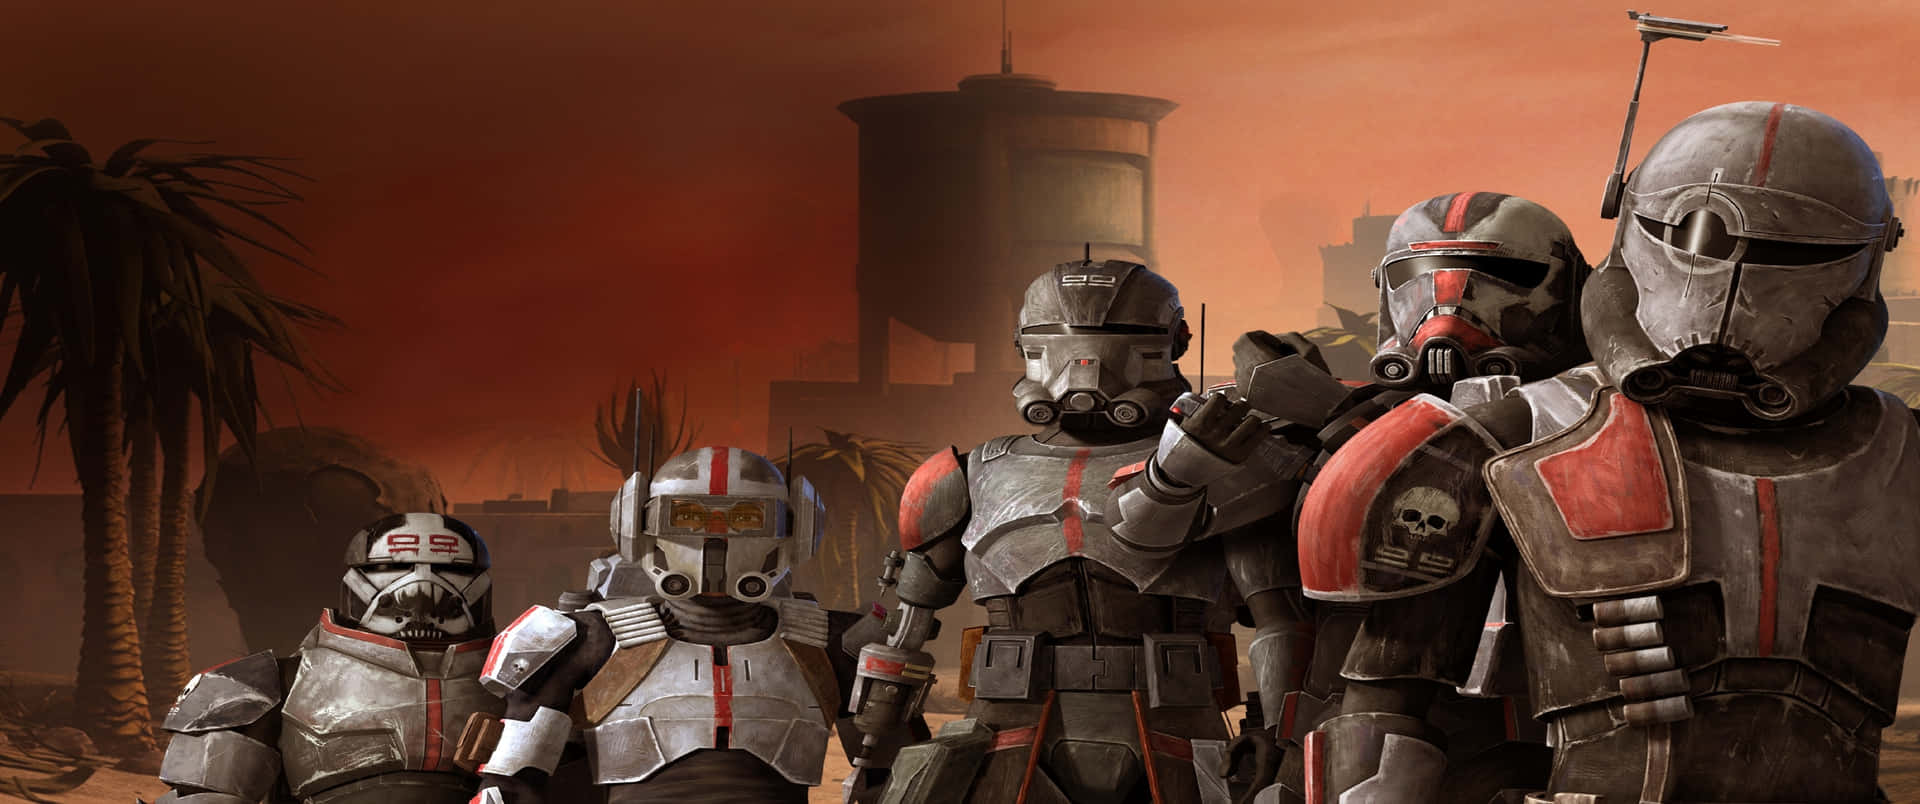 Star_ Wars_ Clone_ Troopers_ Prepared_for_ Battle Wallpaper